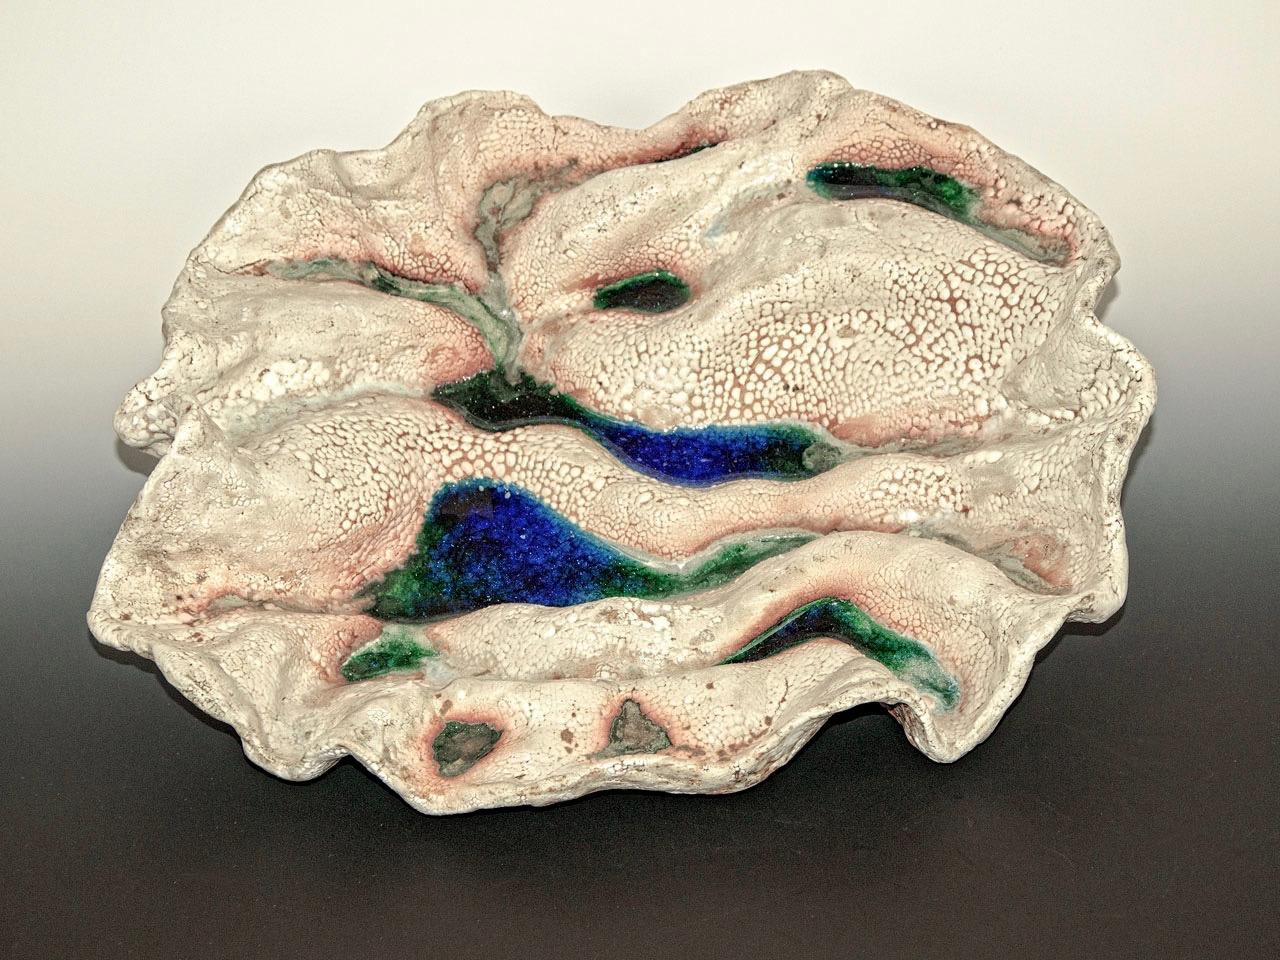 Allan Drossman Abstract Sculpture - "River Landscape", textured ceramic in brilliant blues, greens and cream